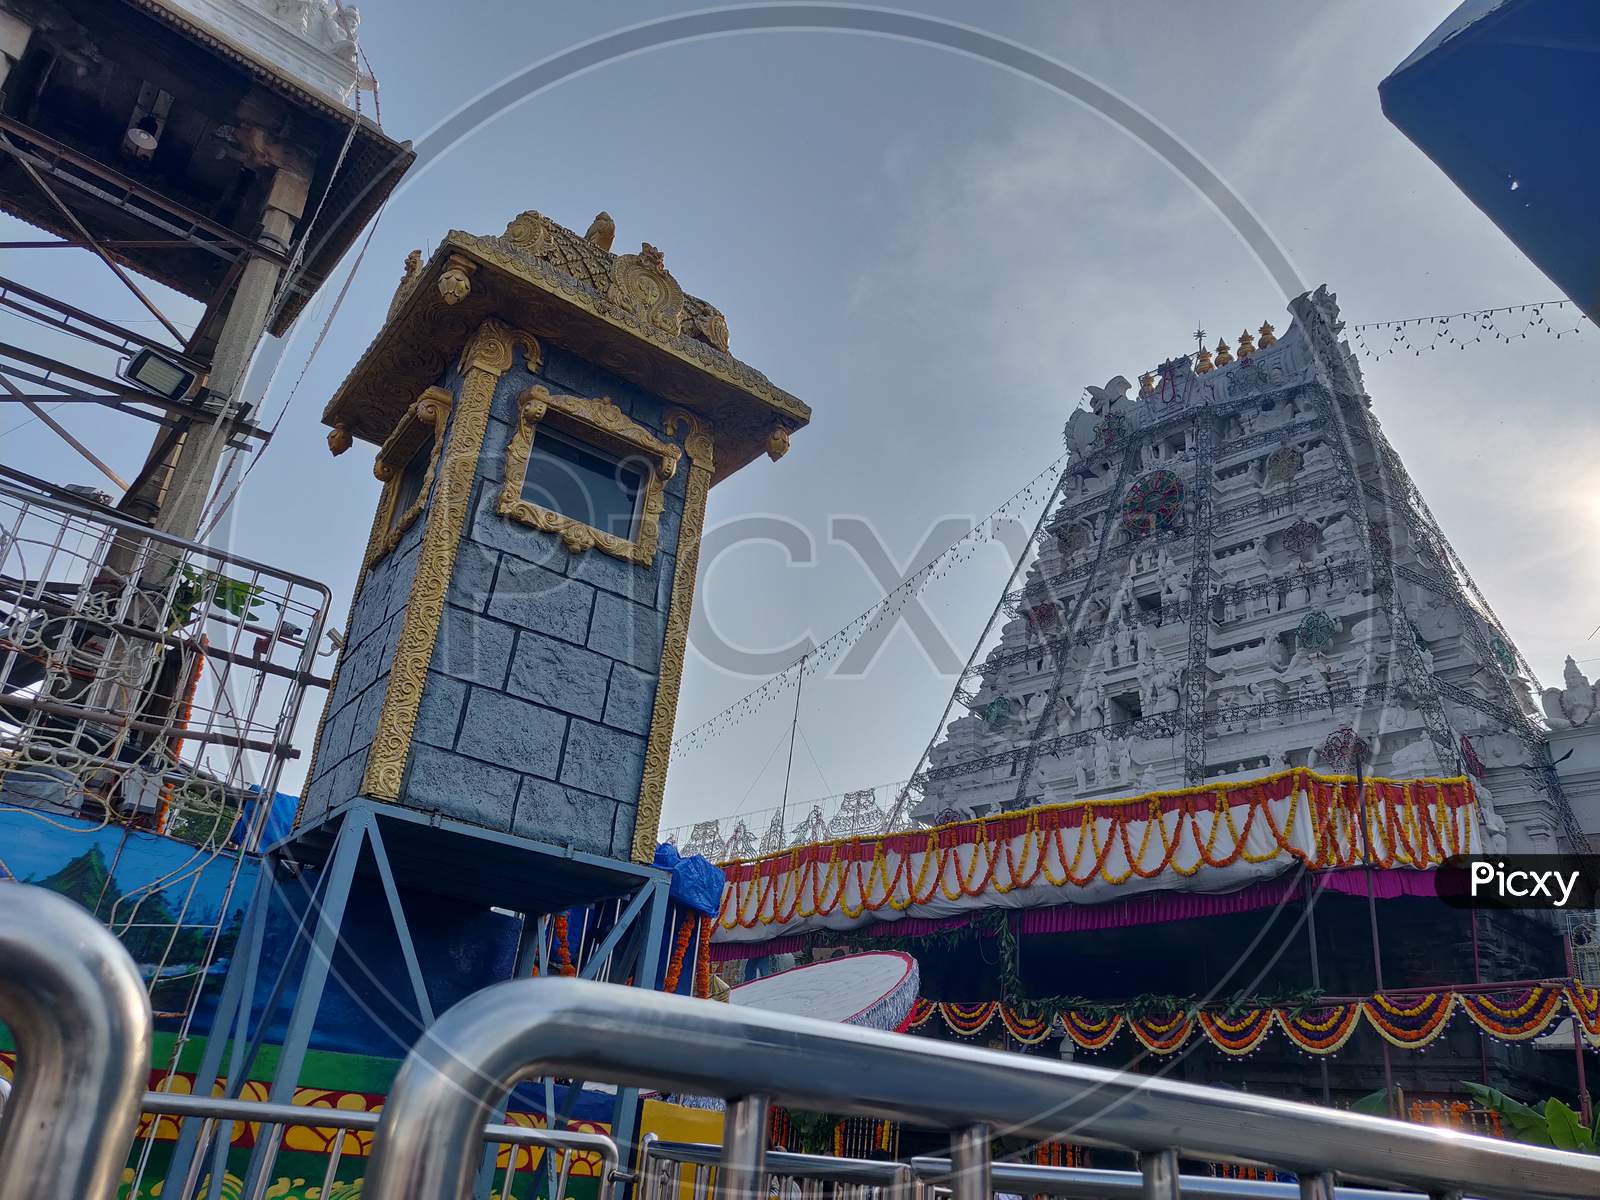 Venkateswara Temple TirumalaTirupati Andhra Pradesh